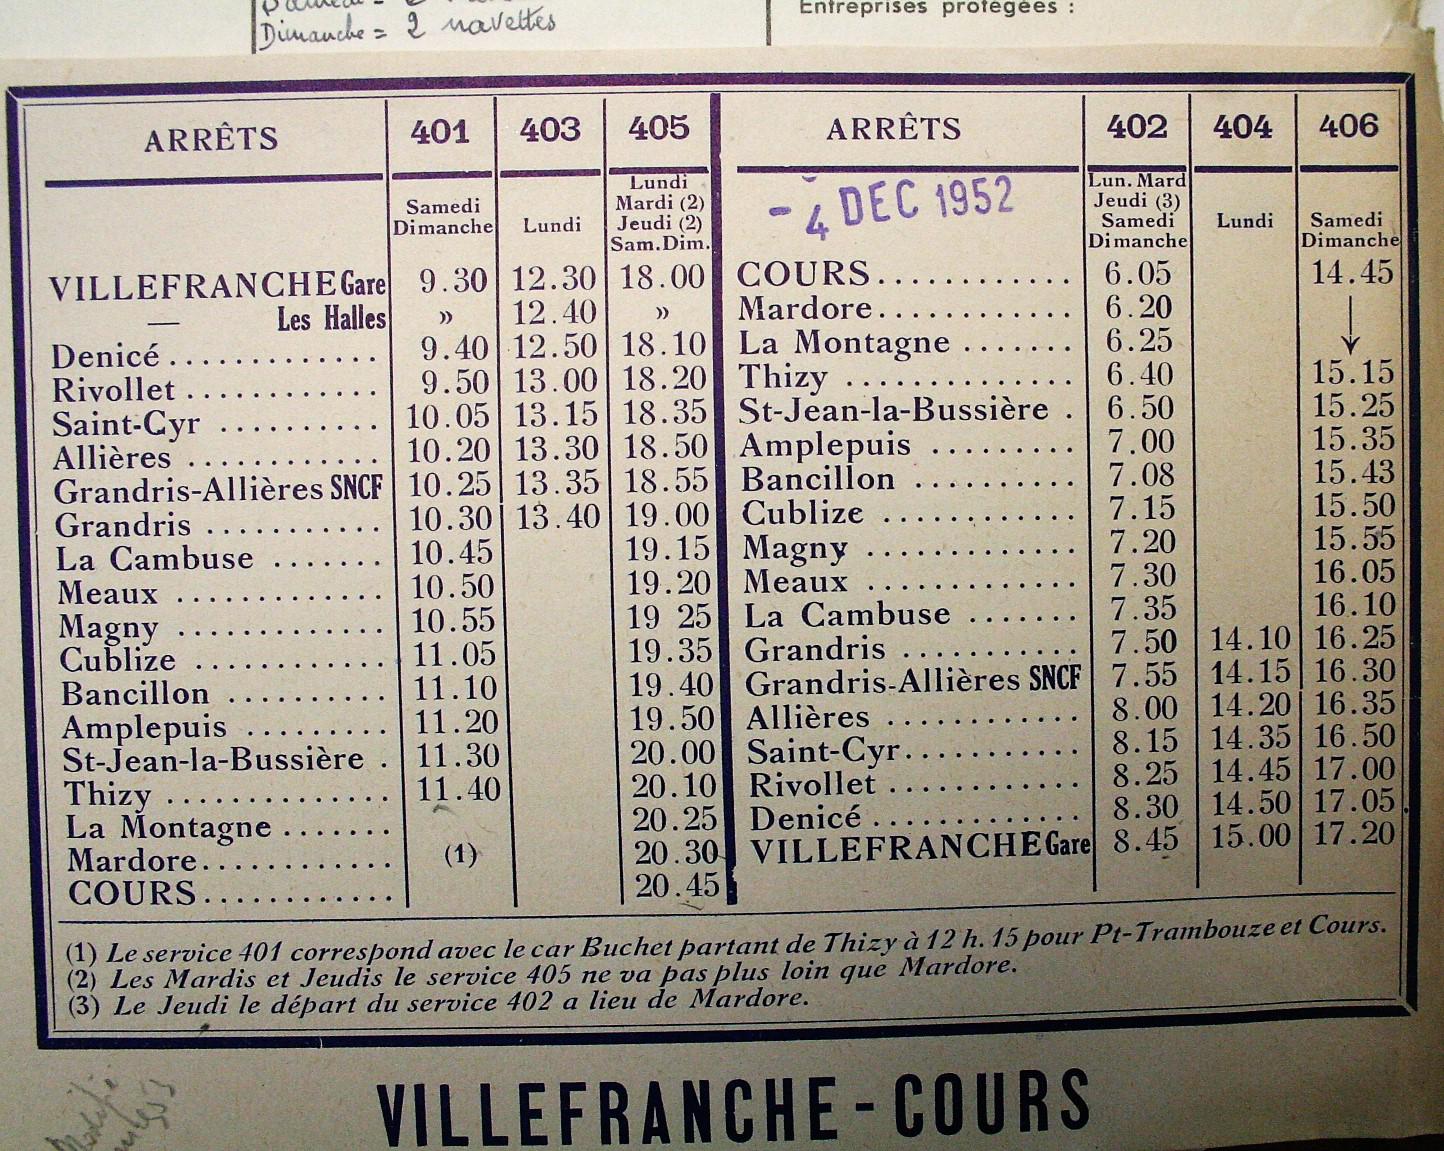 1952 timetable Villefranche - Cours